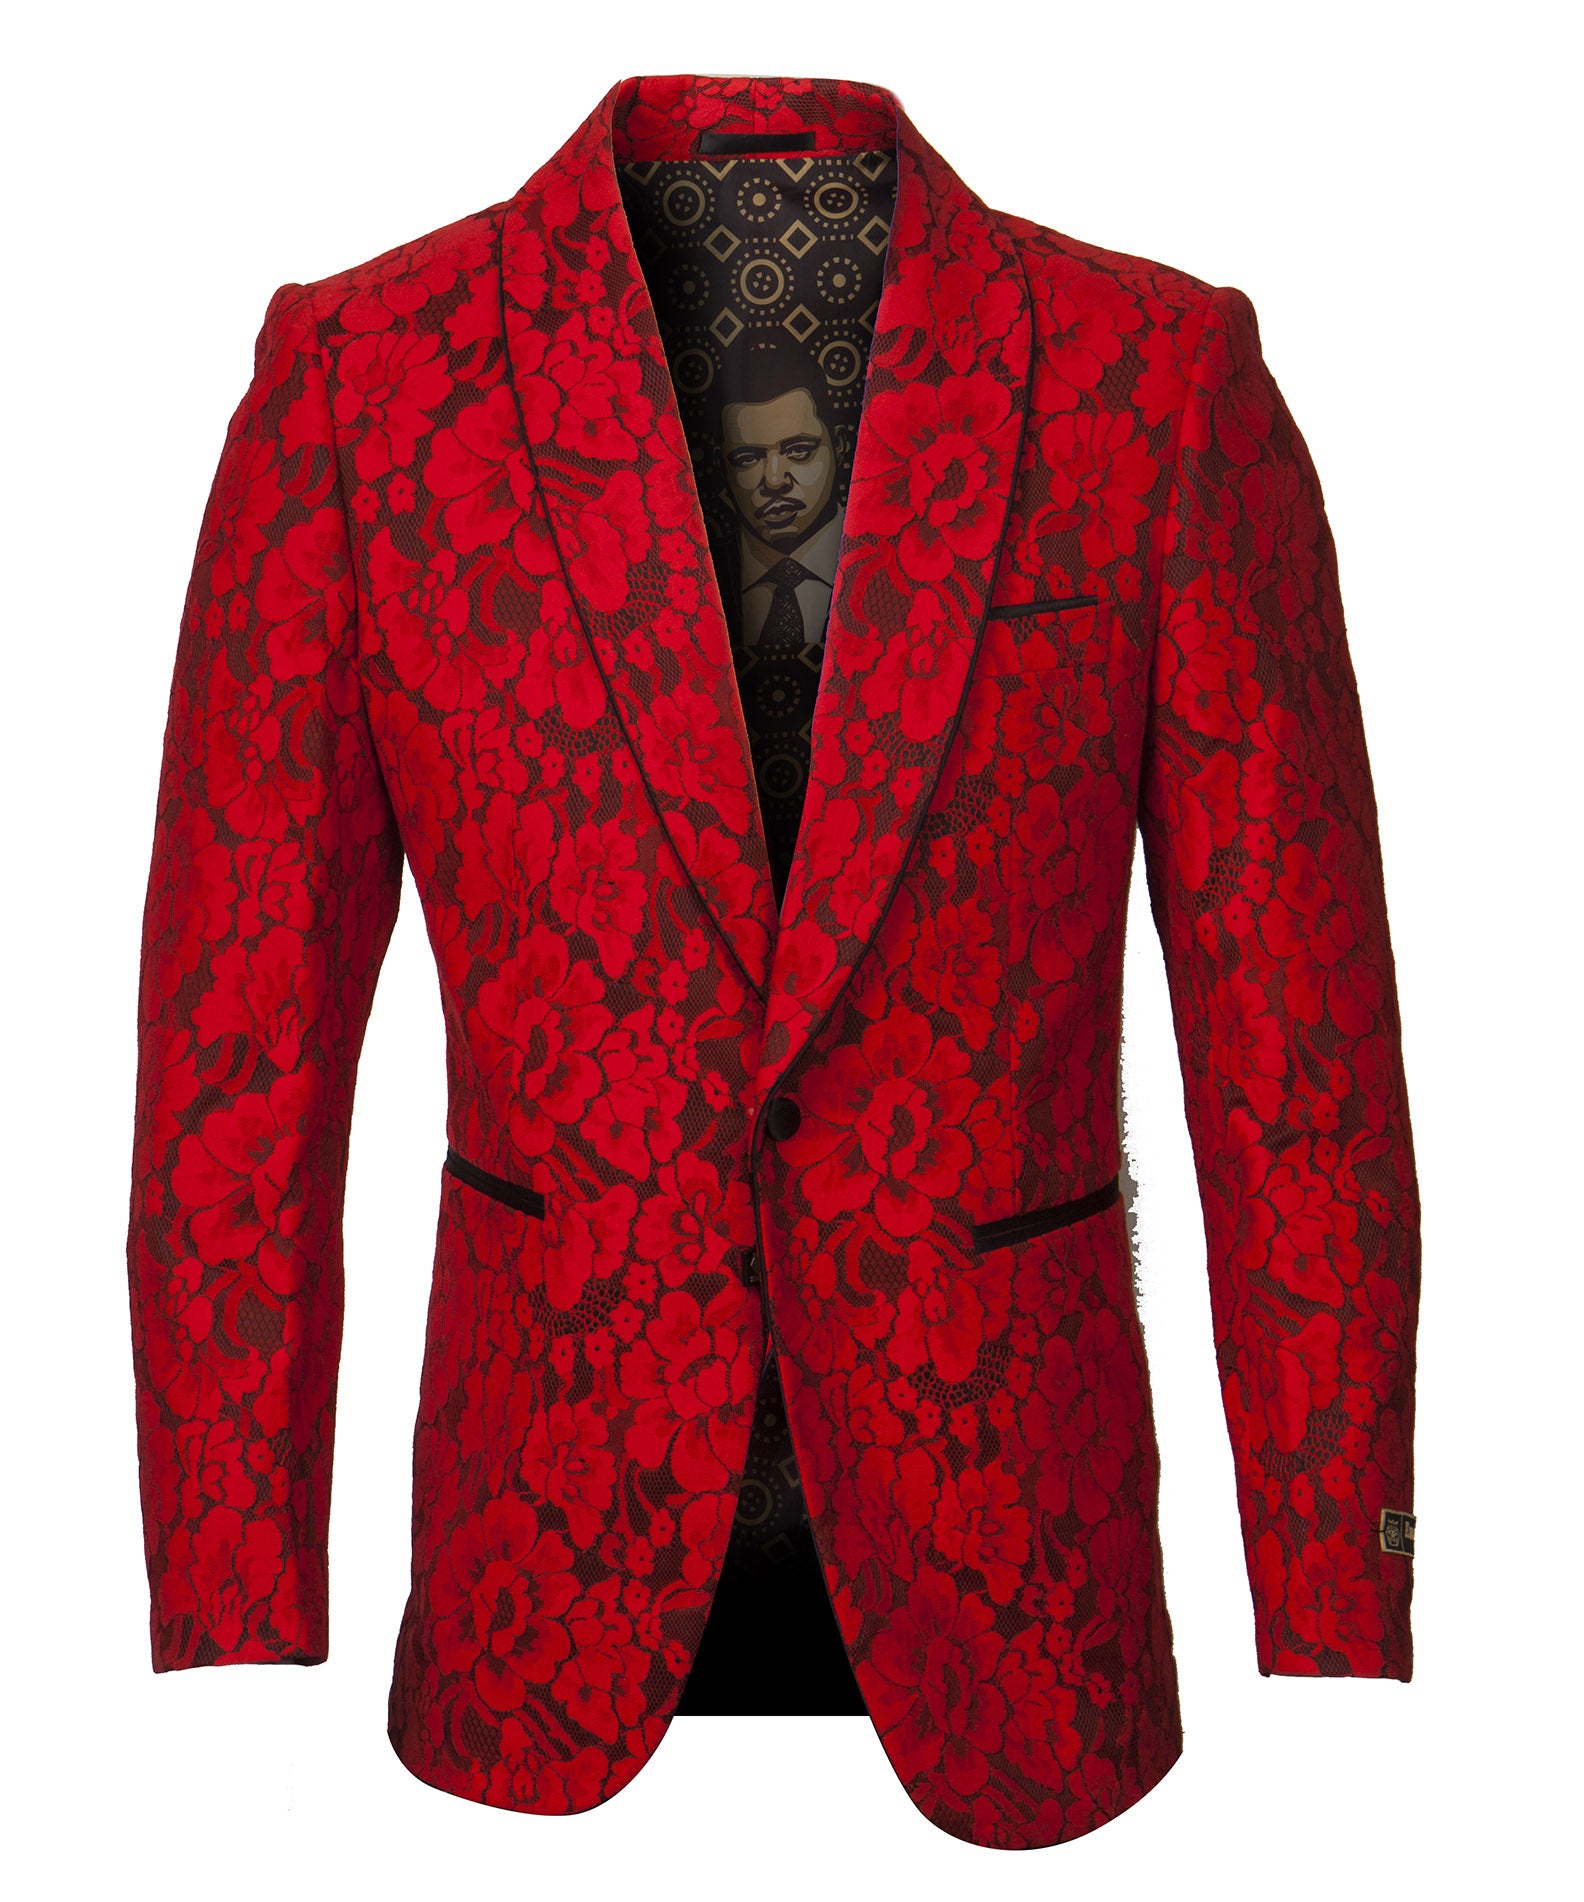 Tan Empire Show Blazers Formal Dinner Suit Jackets For Men ME317H-01